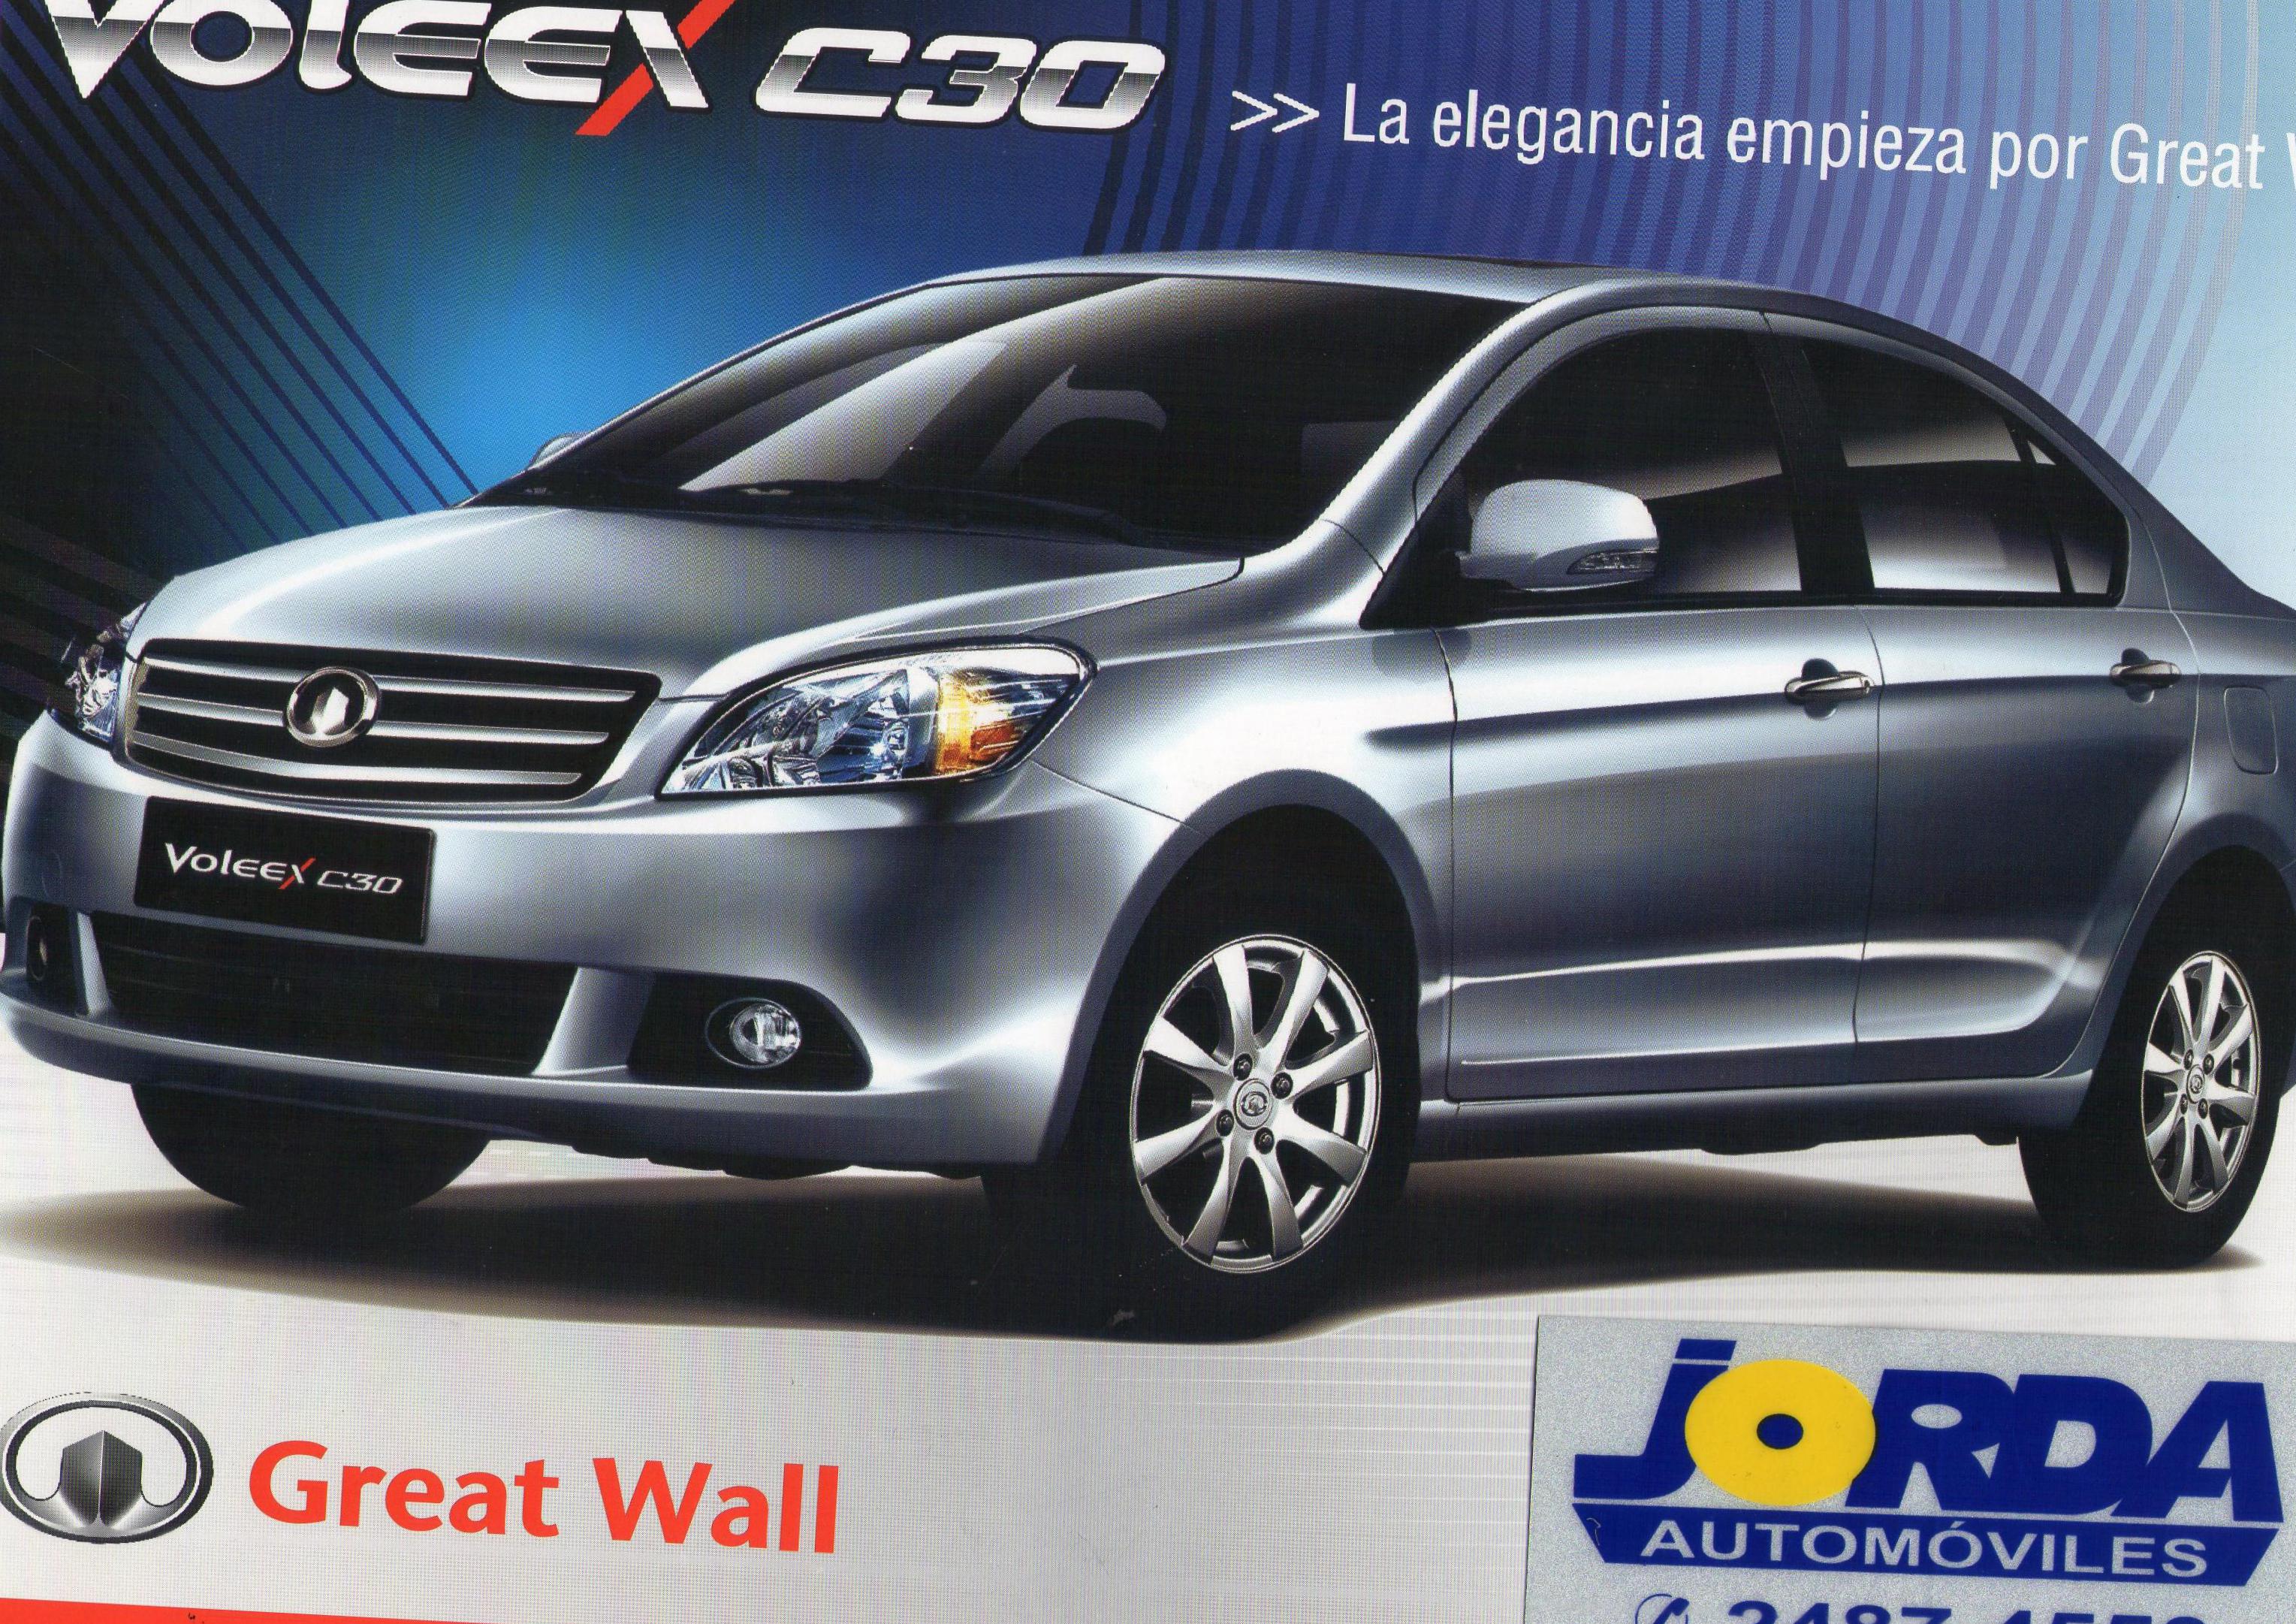 Voleex C30 Great Wall models suv